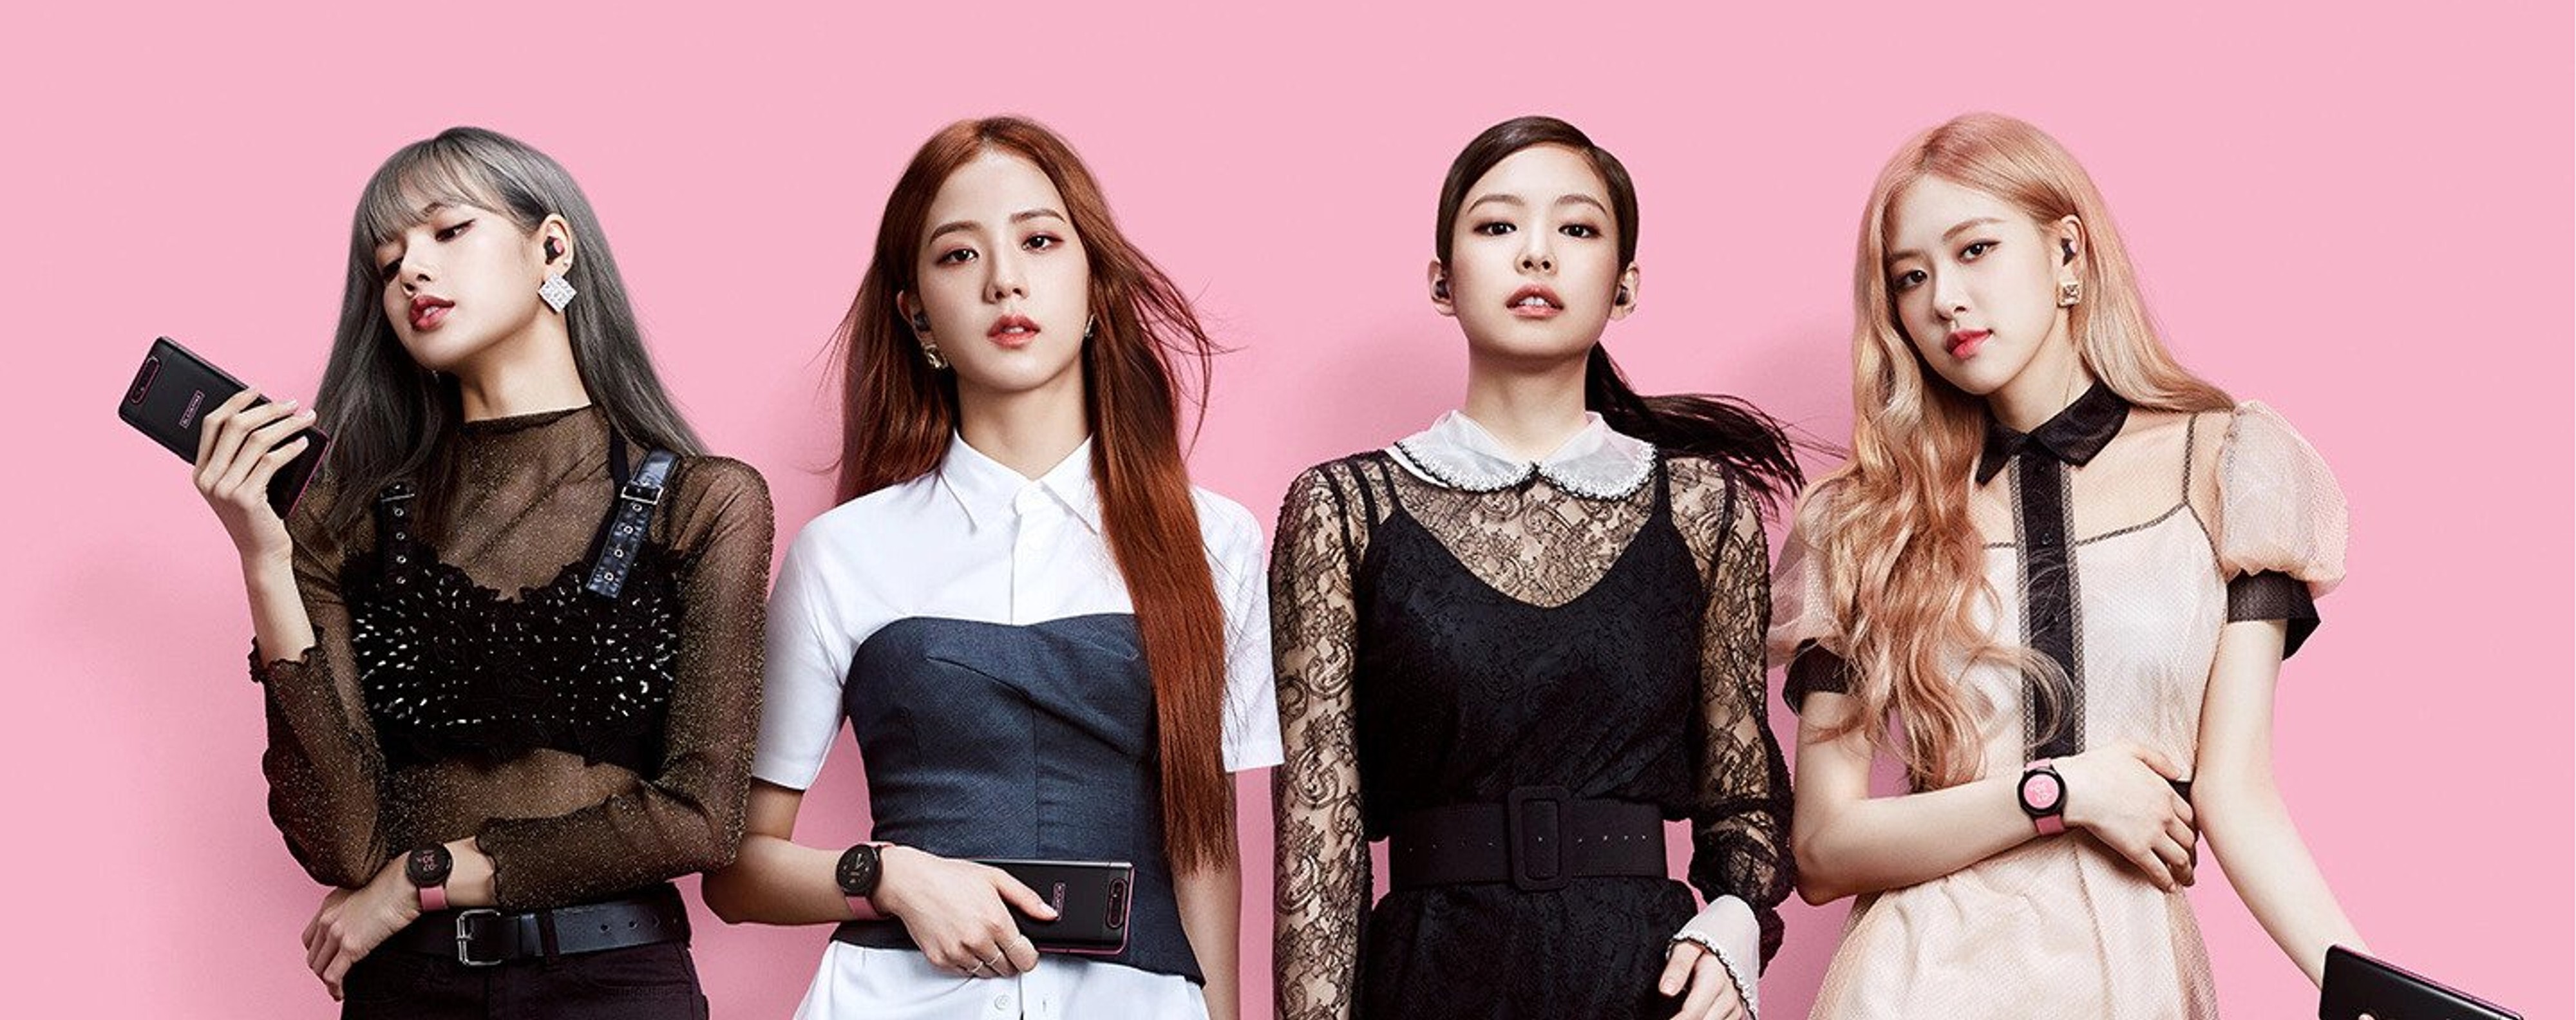 Blackpink are unshakeable Samsung ambassadors: Jisoo, Jennie, Rosé